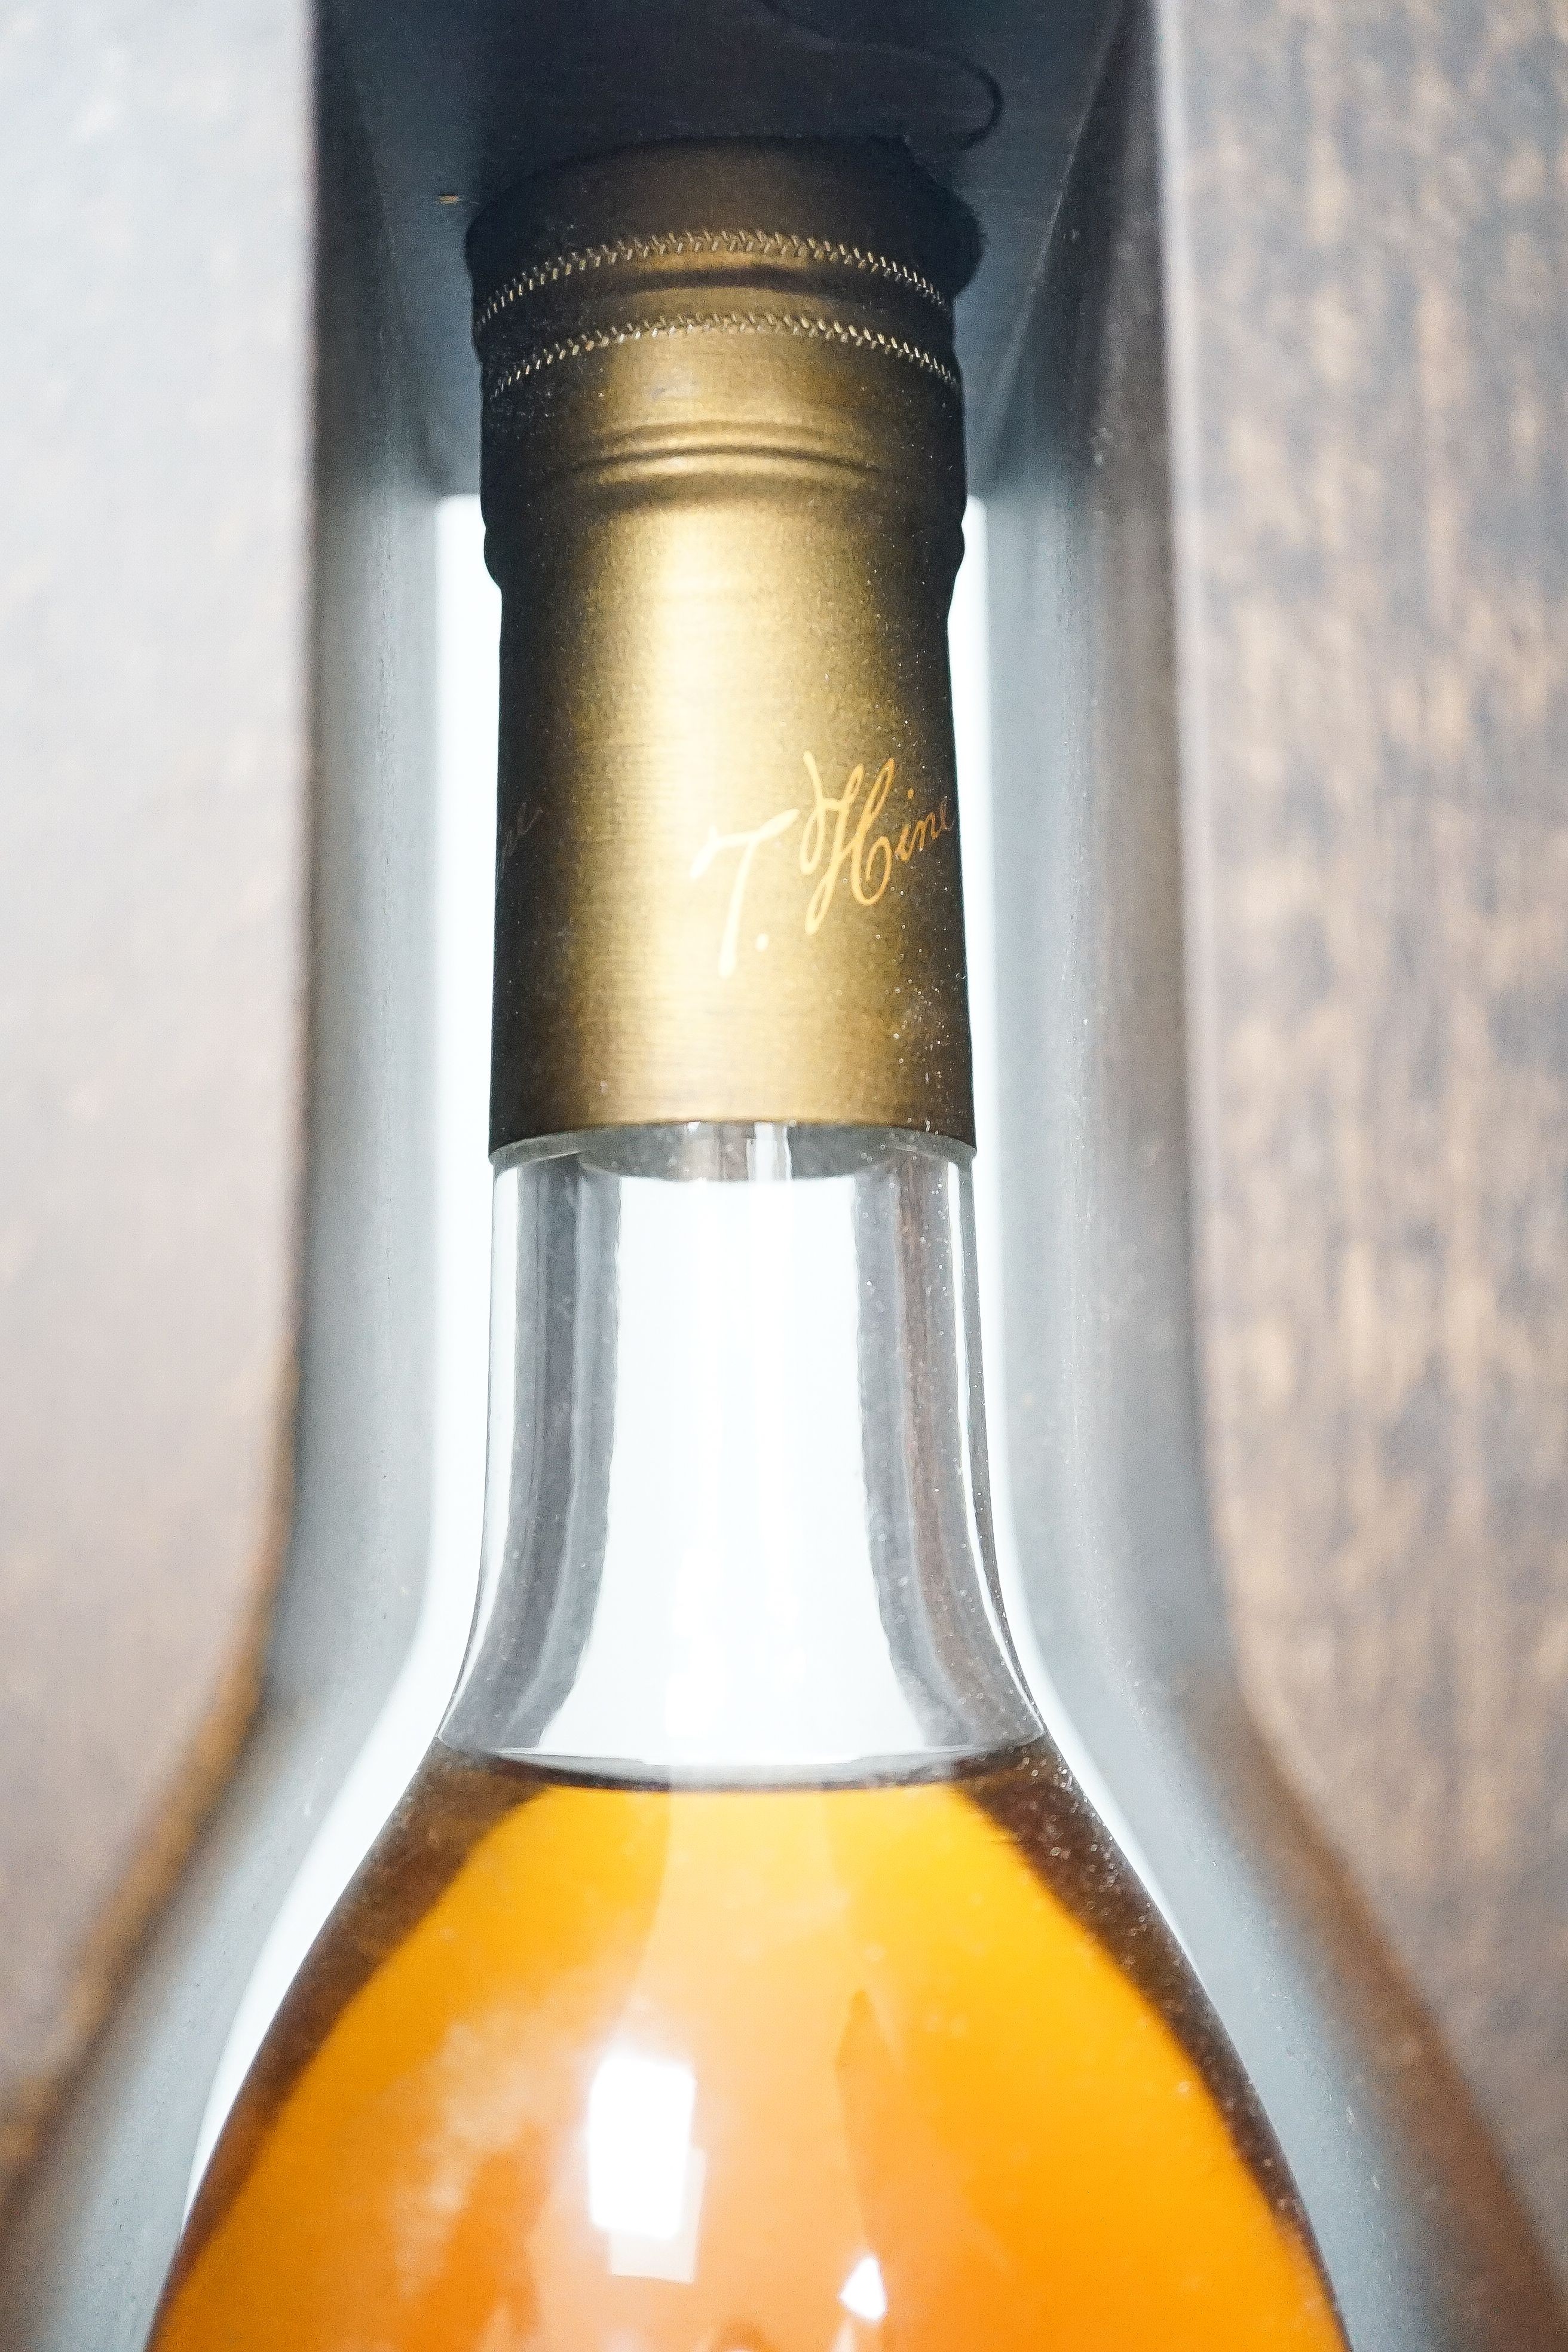 One cased bottle of Hine 1975 cognac